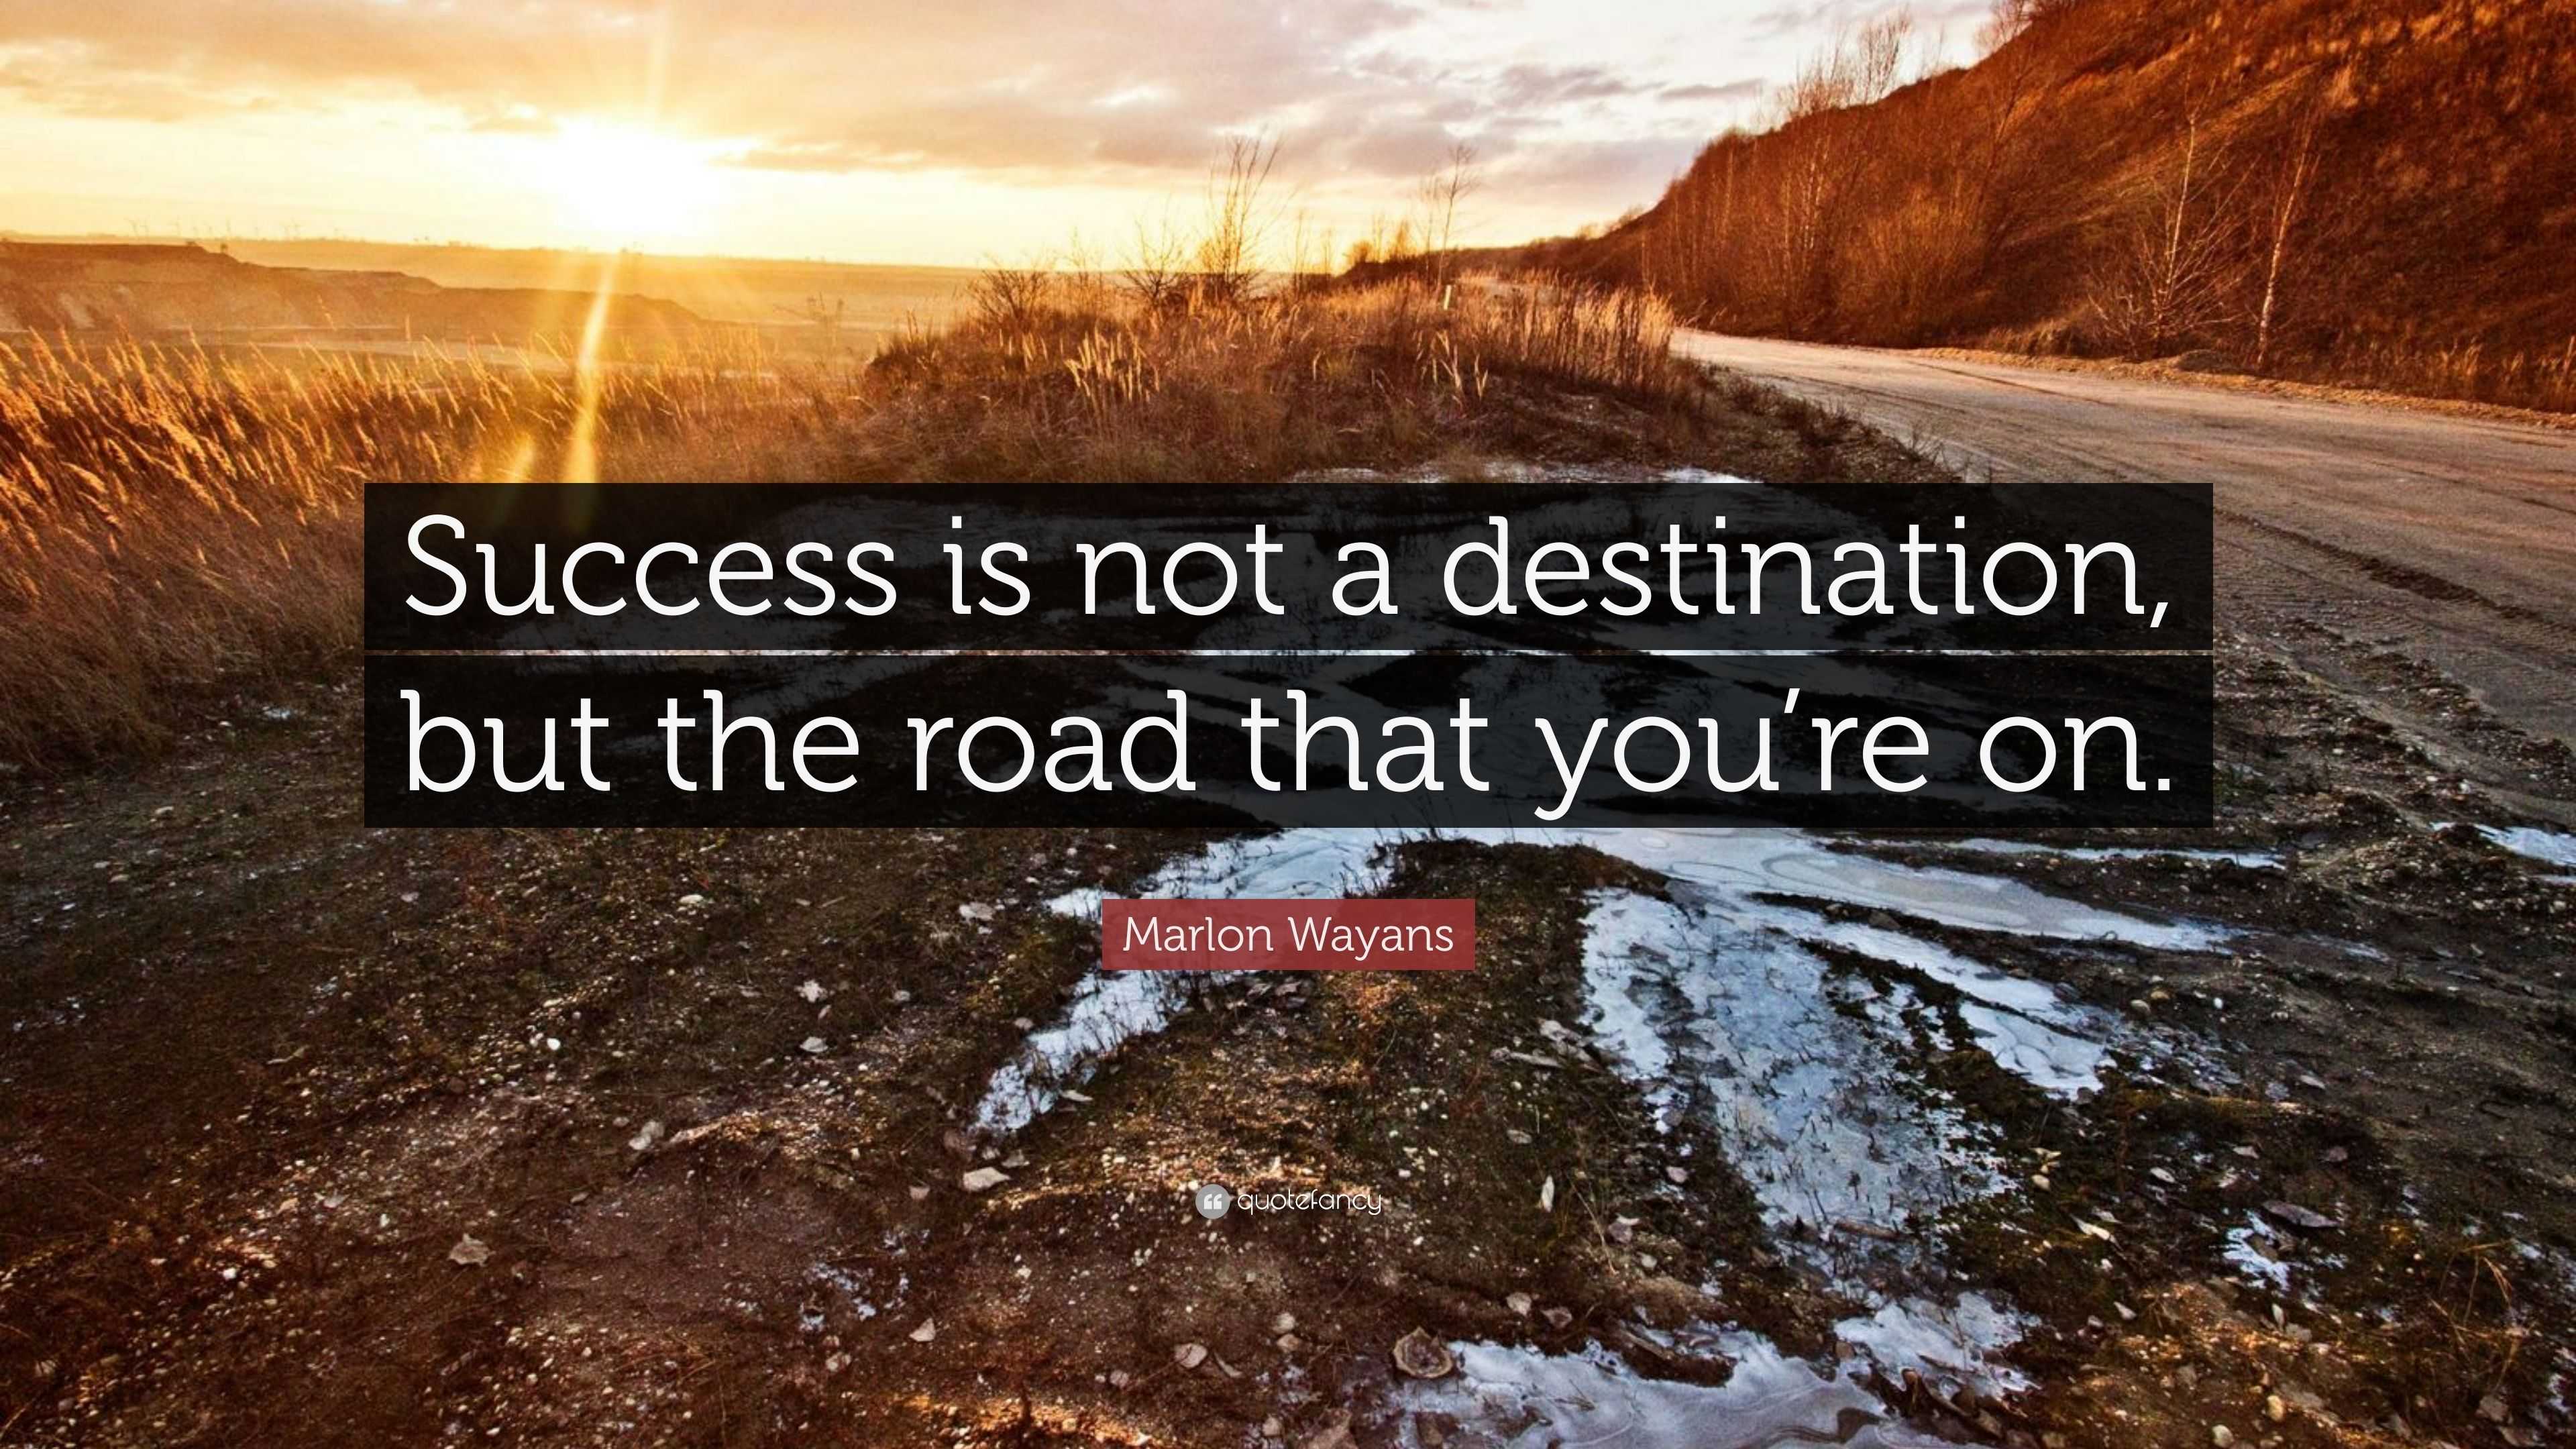 Marlon Wayans Quote: “Success is not a destination, but the road that ...